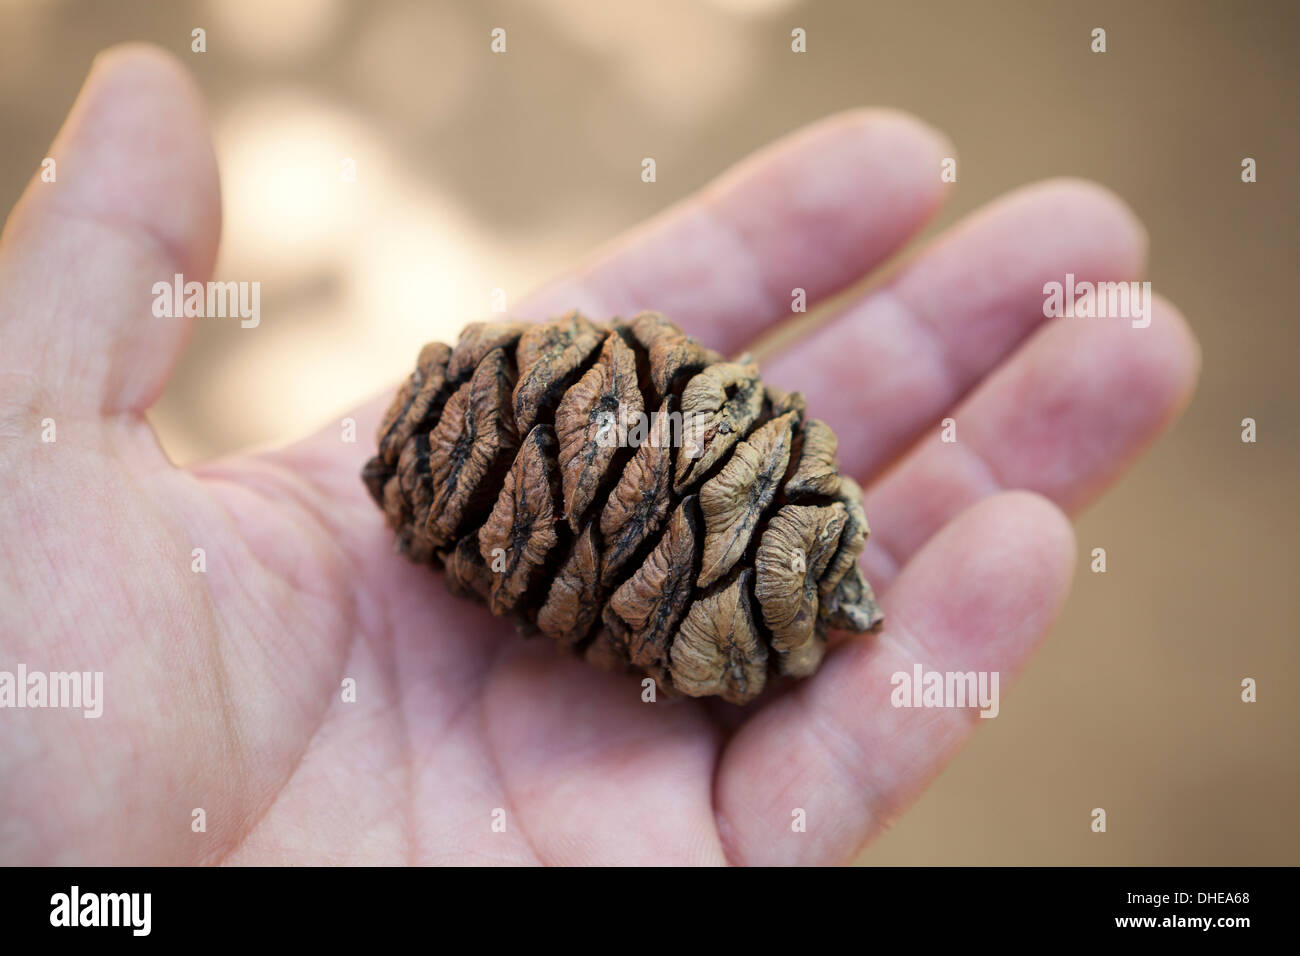 Giant Sequoia cone in hand - California USA Stock Photo